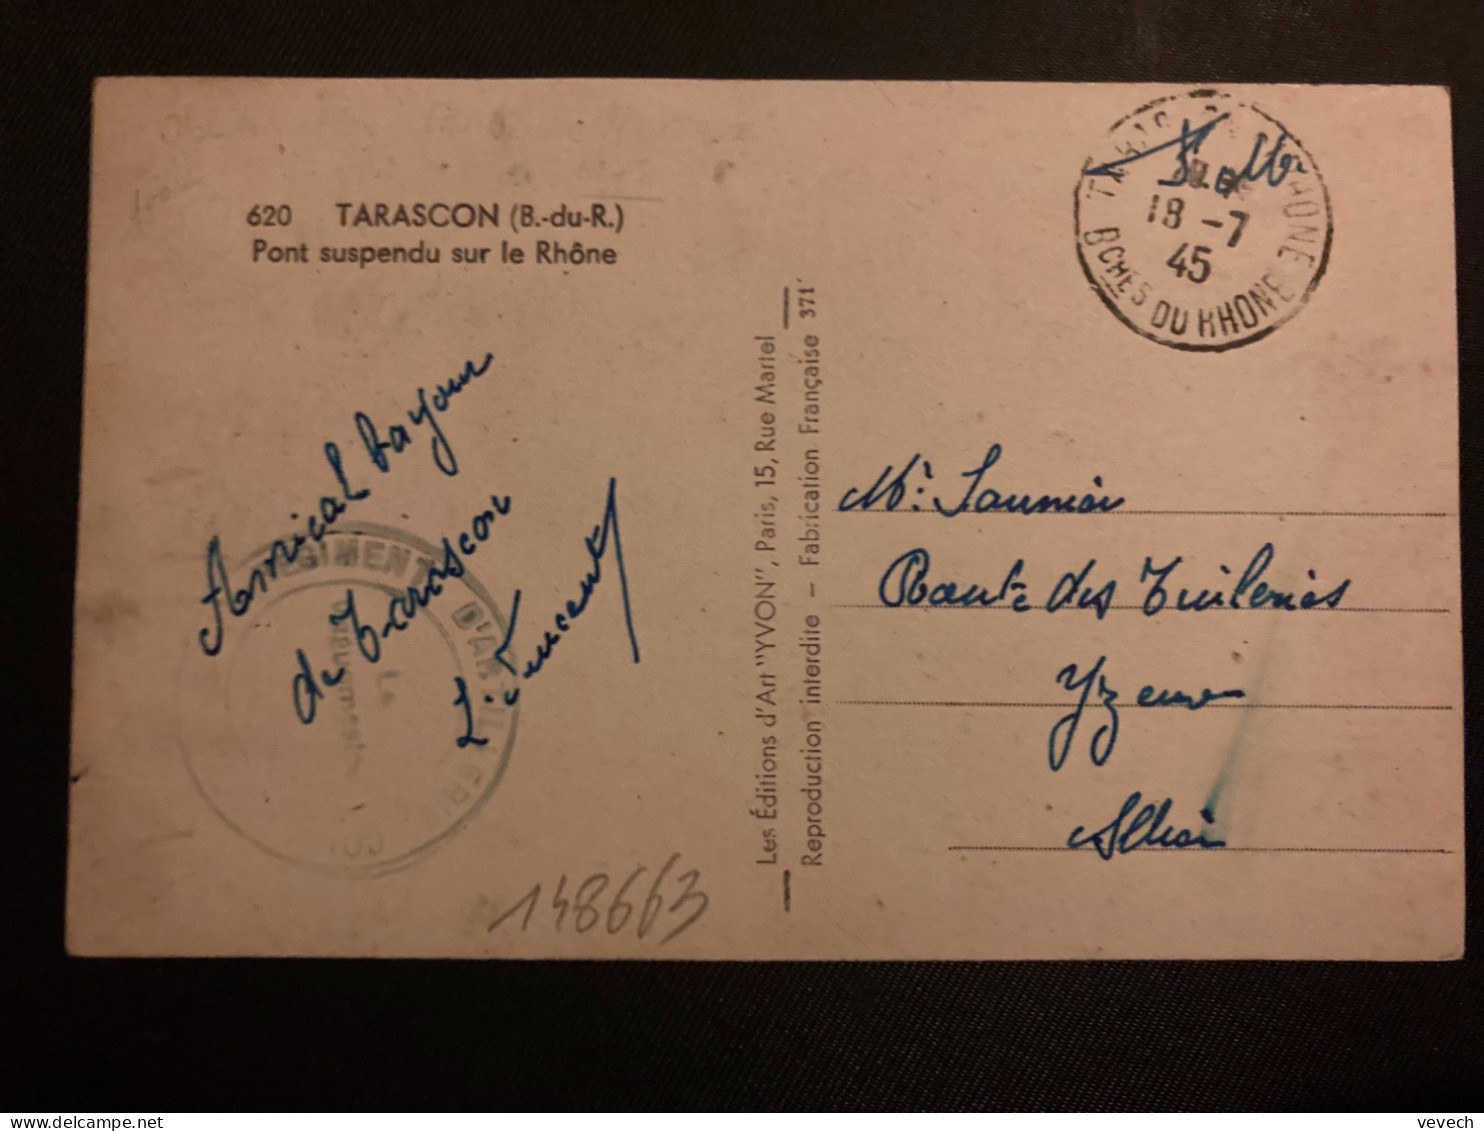 CP TARASCON En FM OBL.18-7 45 TARASCON S/RHONE Bches DU RHONE (13) REGIMENT D'ARTILLERIE - Guerra De 1939-45